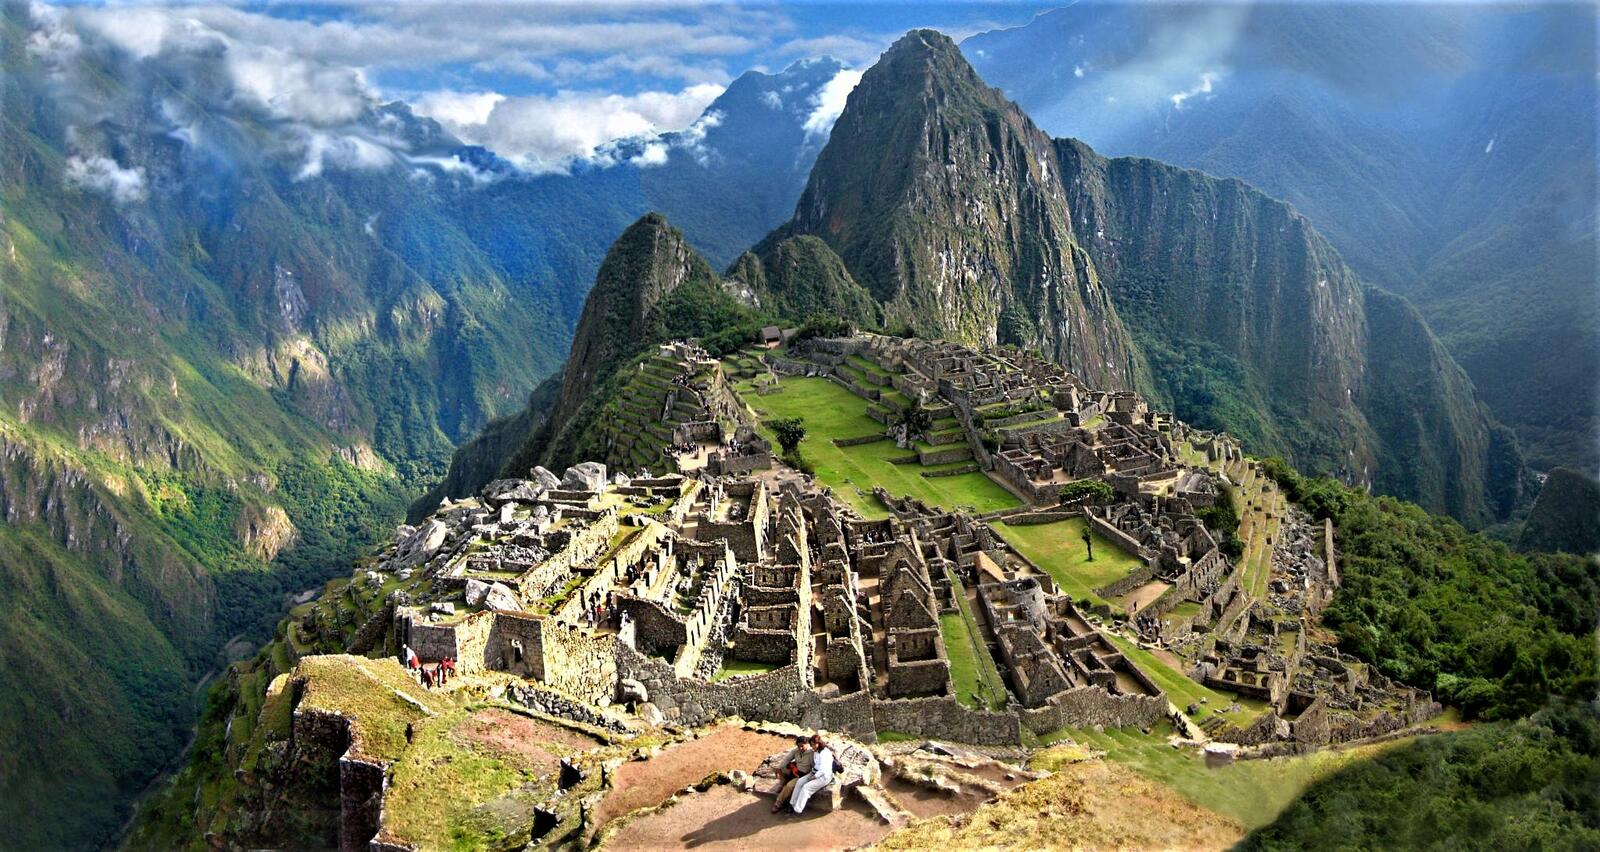 Обои Machu Picchu Per на рабочий стол